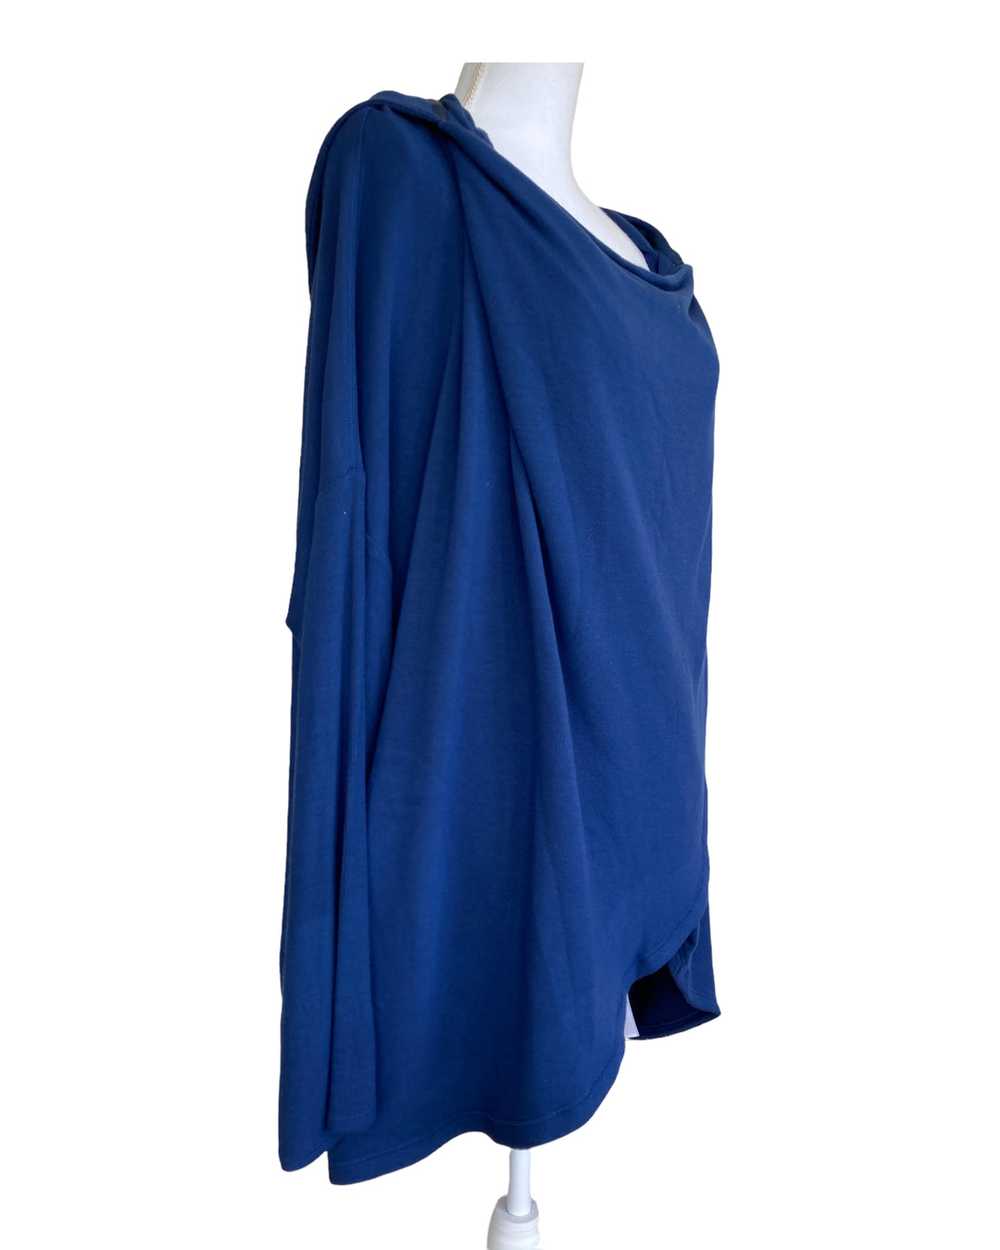 Athleta Blue Sweatshirt Cape, 2X - image 3